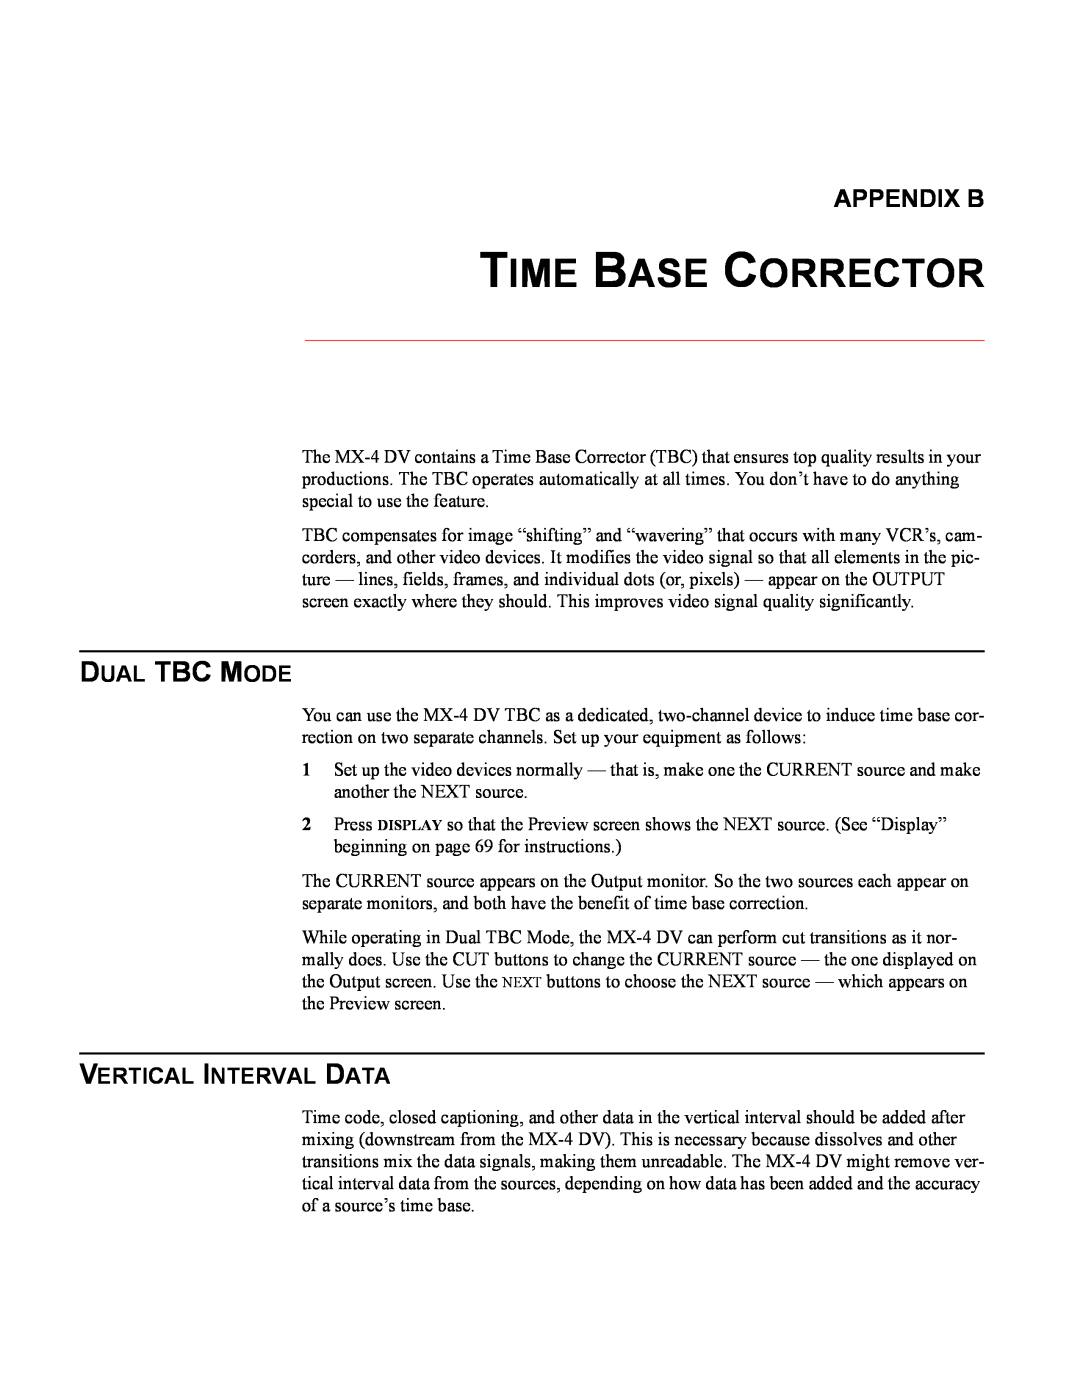 FOCUS Enhancements MX-4DV manual Time Base Corrector, Appendix B, Dual Tbc Mode, Vertical Interval Data 